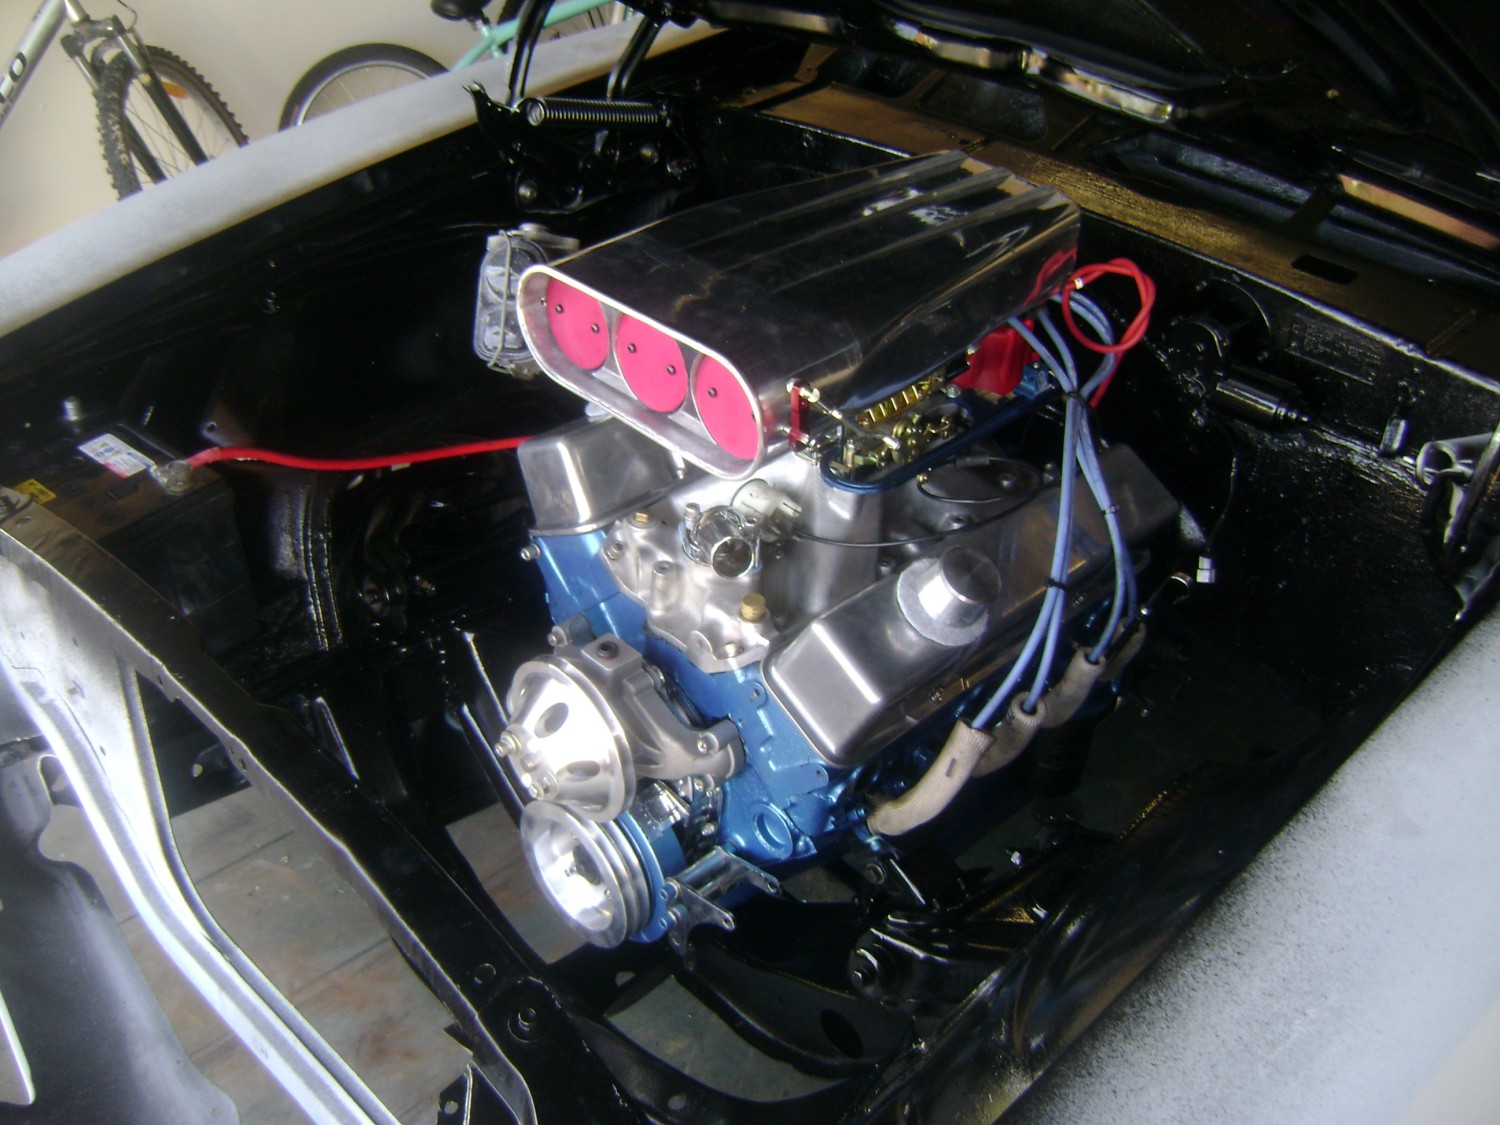 1967 Pontiac firebird